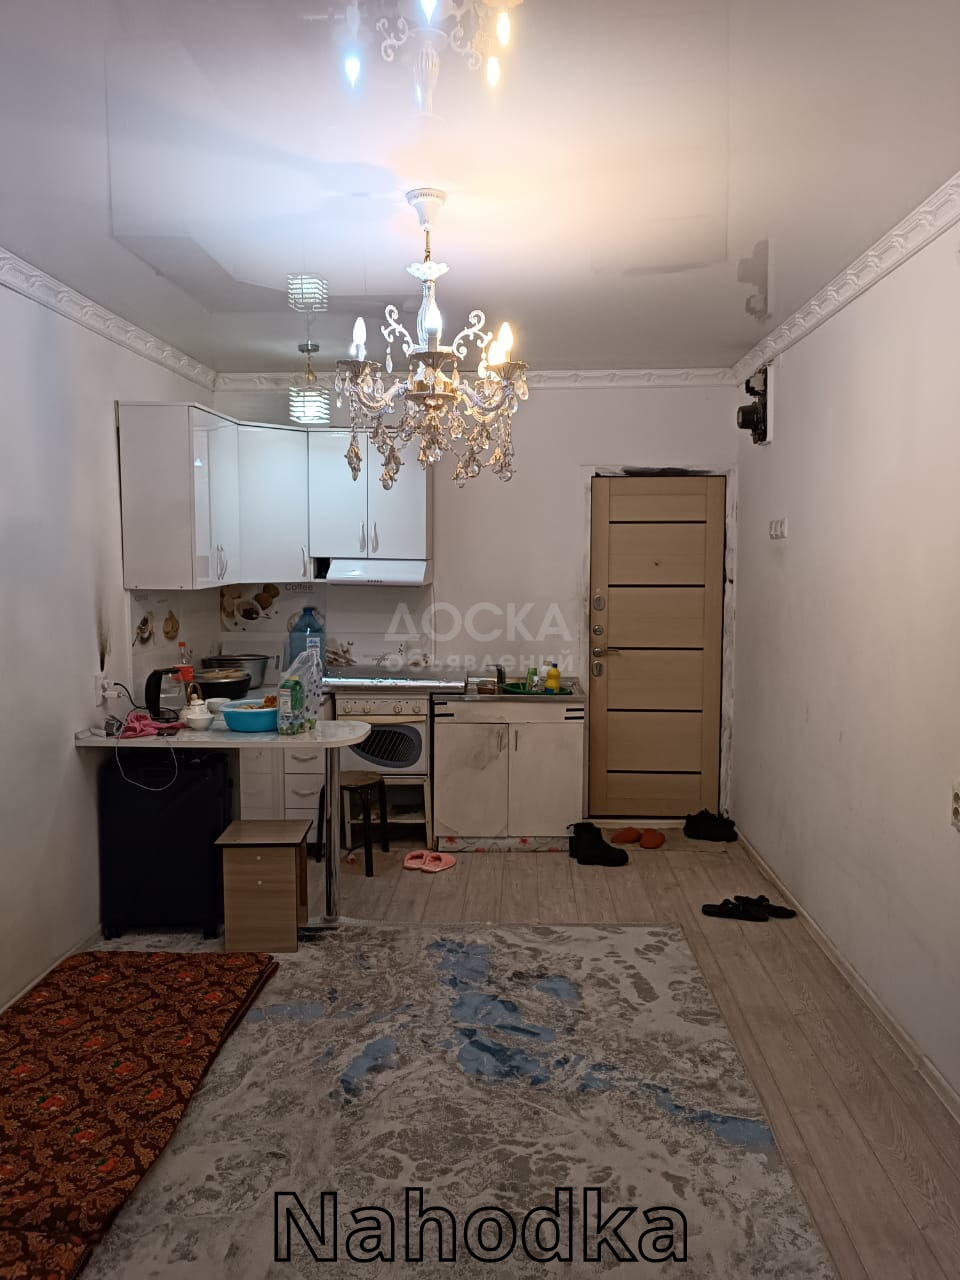 Продаю 1-комнатную квартиру, 23кв. м., этаж - 2/4, ул. Кольбаева.